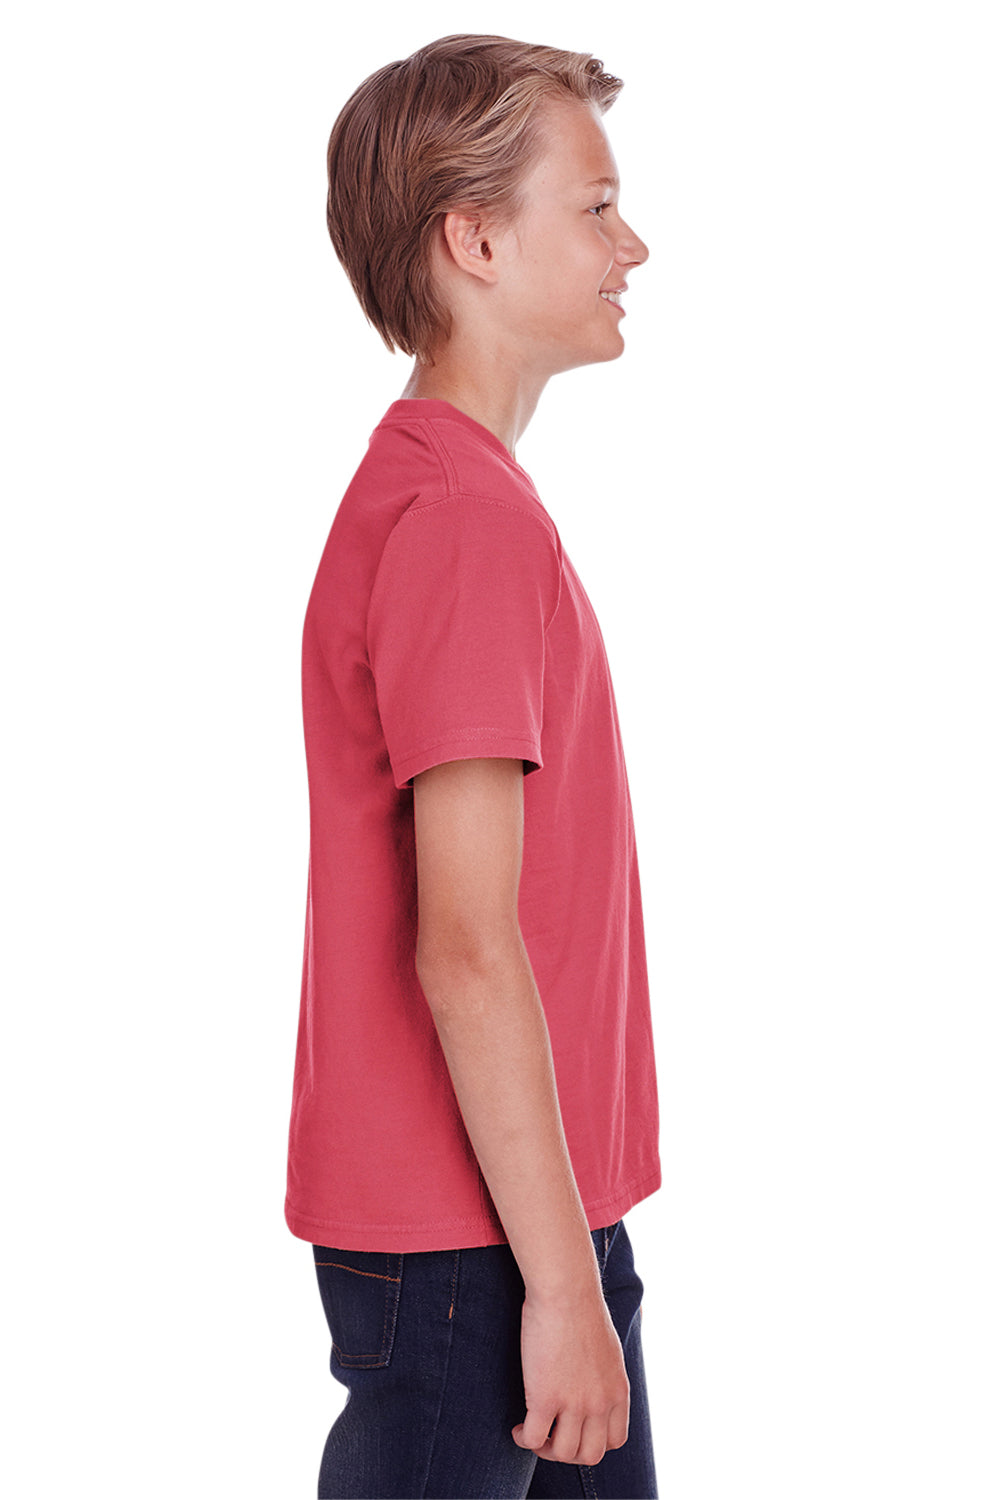 ComfortWash by Hanes GDH175 Youth Short Sleeve Crewneck T-Shirt Crimson Red Side